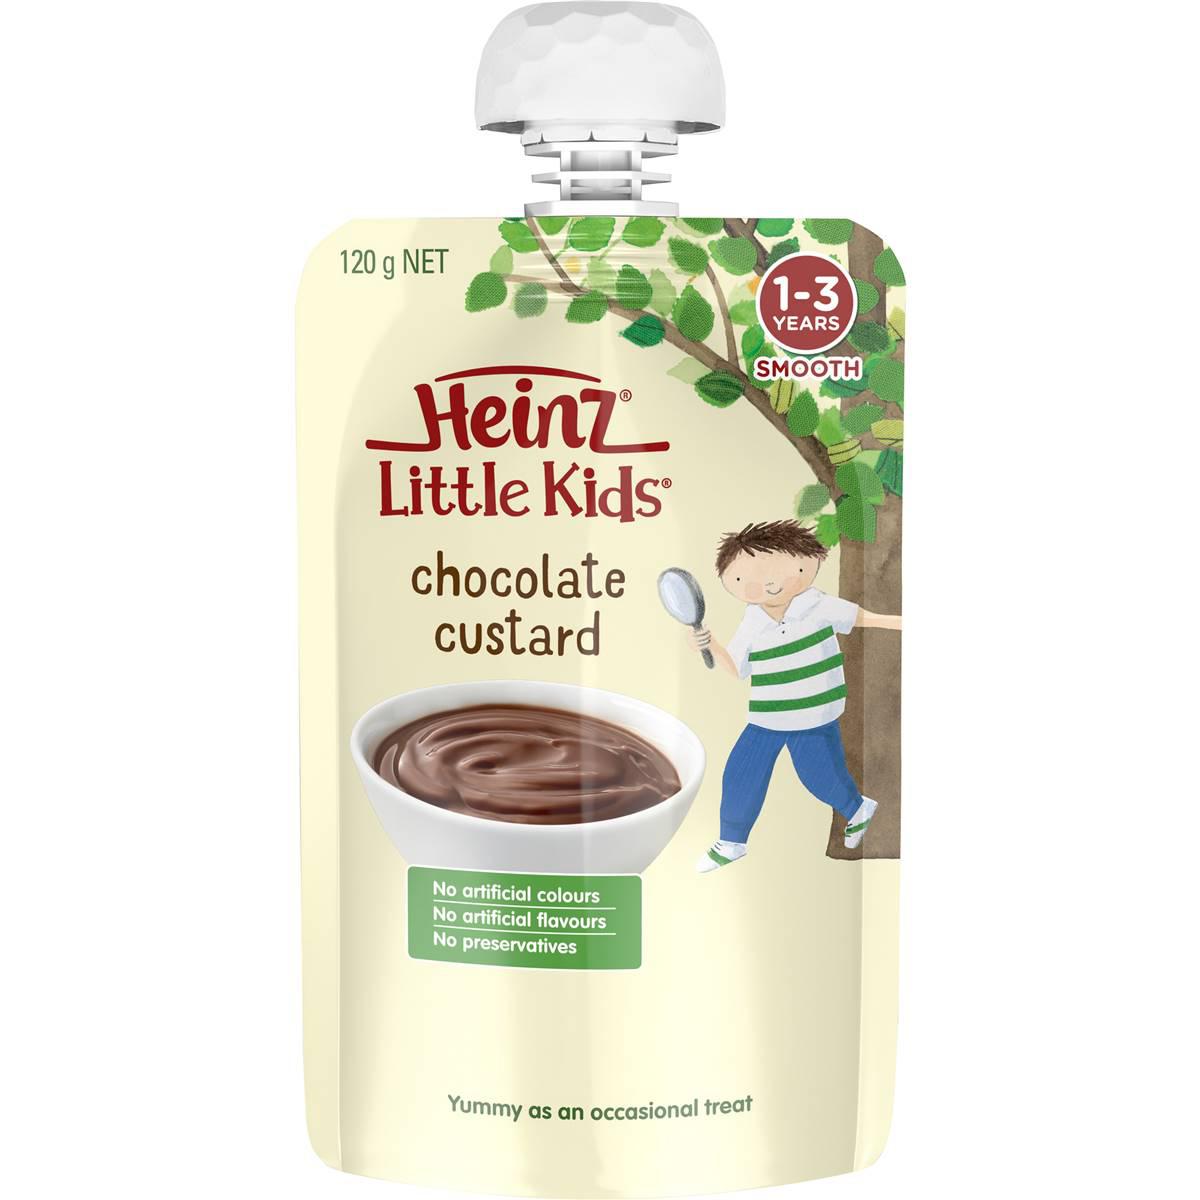 Heinz Little Kids Chocolate Custard Toddler Food Pouch 1-3 Years 120g